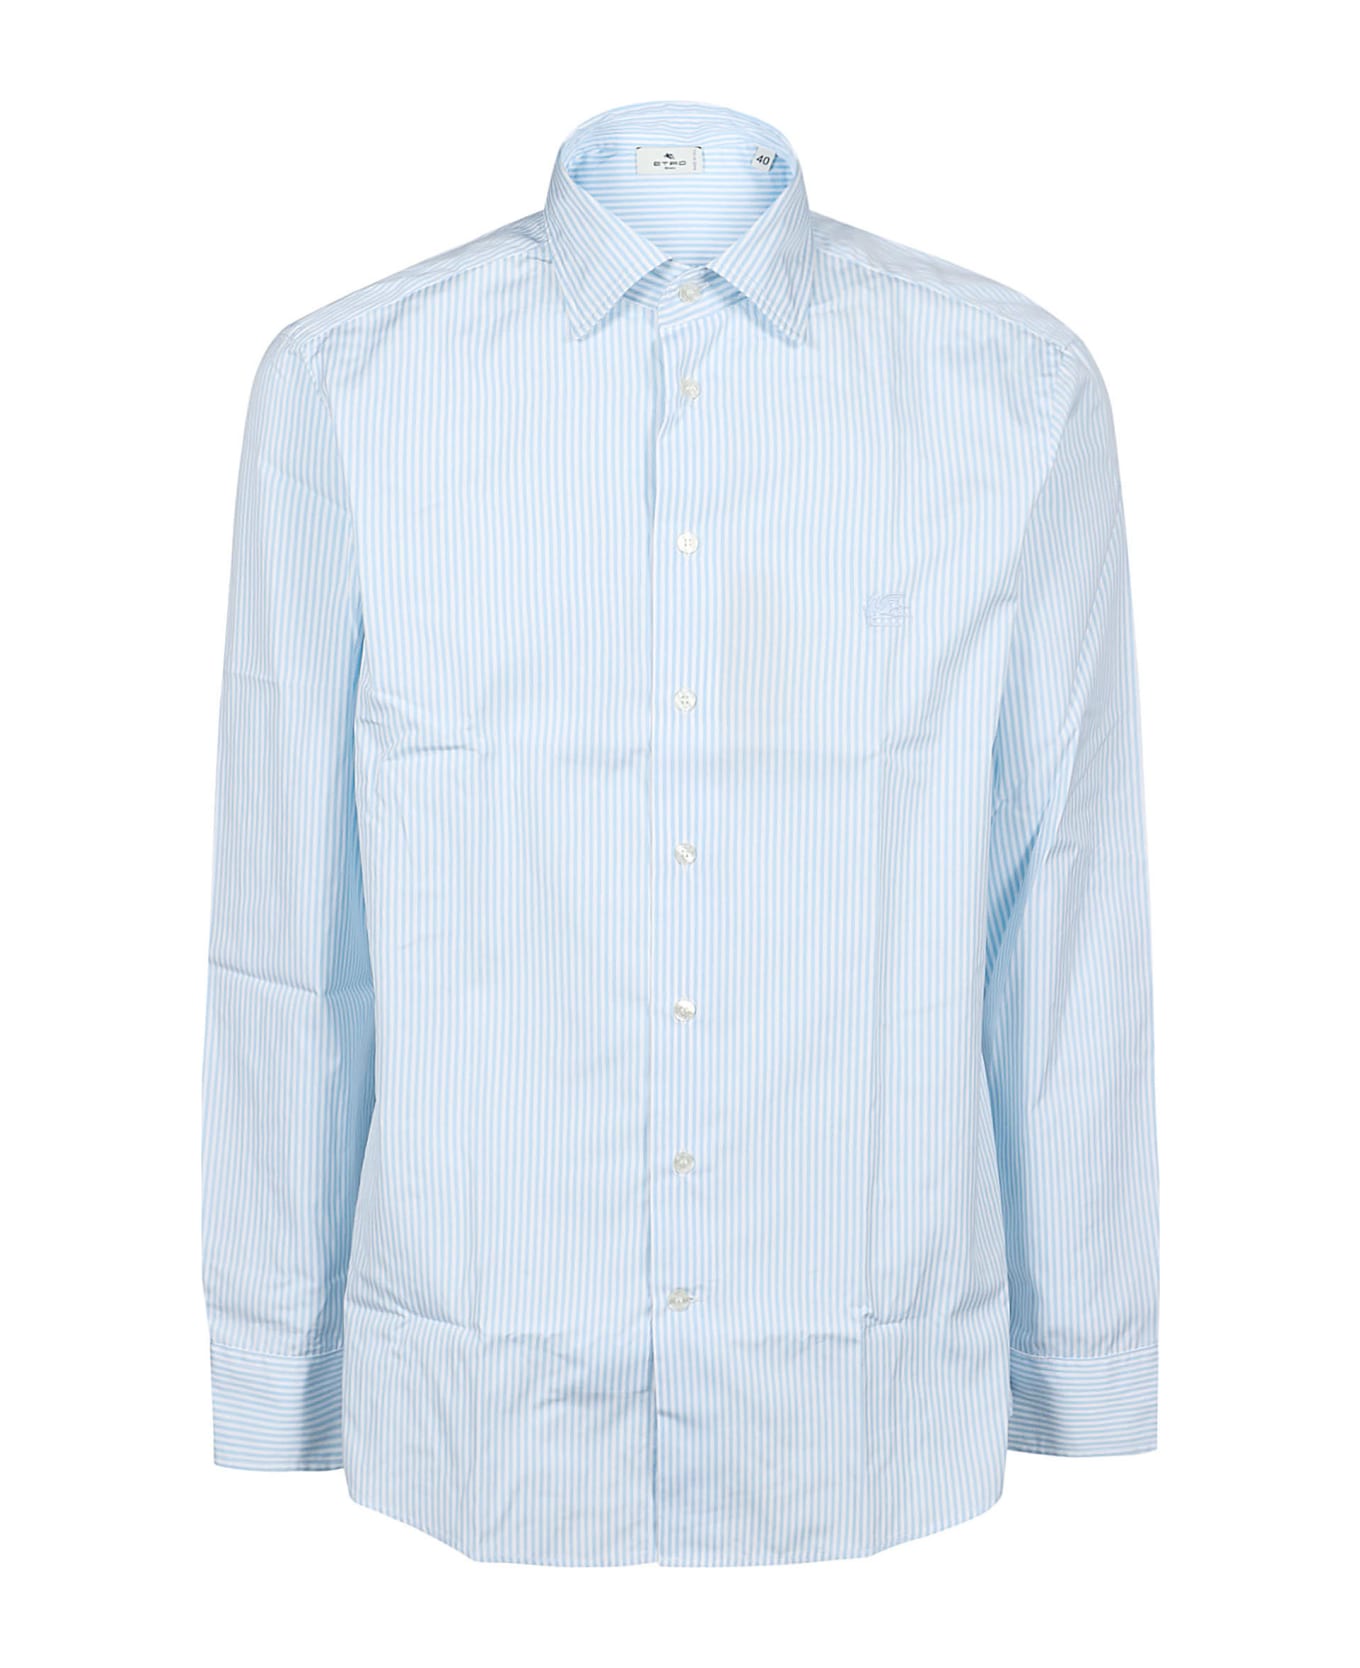 Etro Roma Long Sleeve Shirt - Bianco/azzurro シャツ